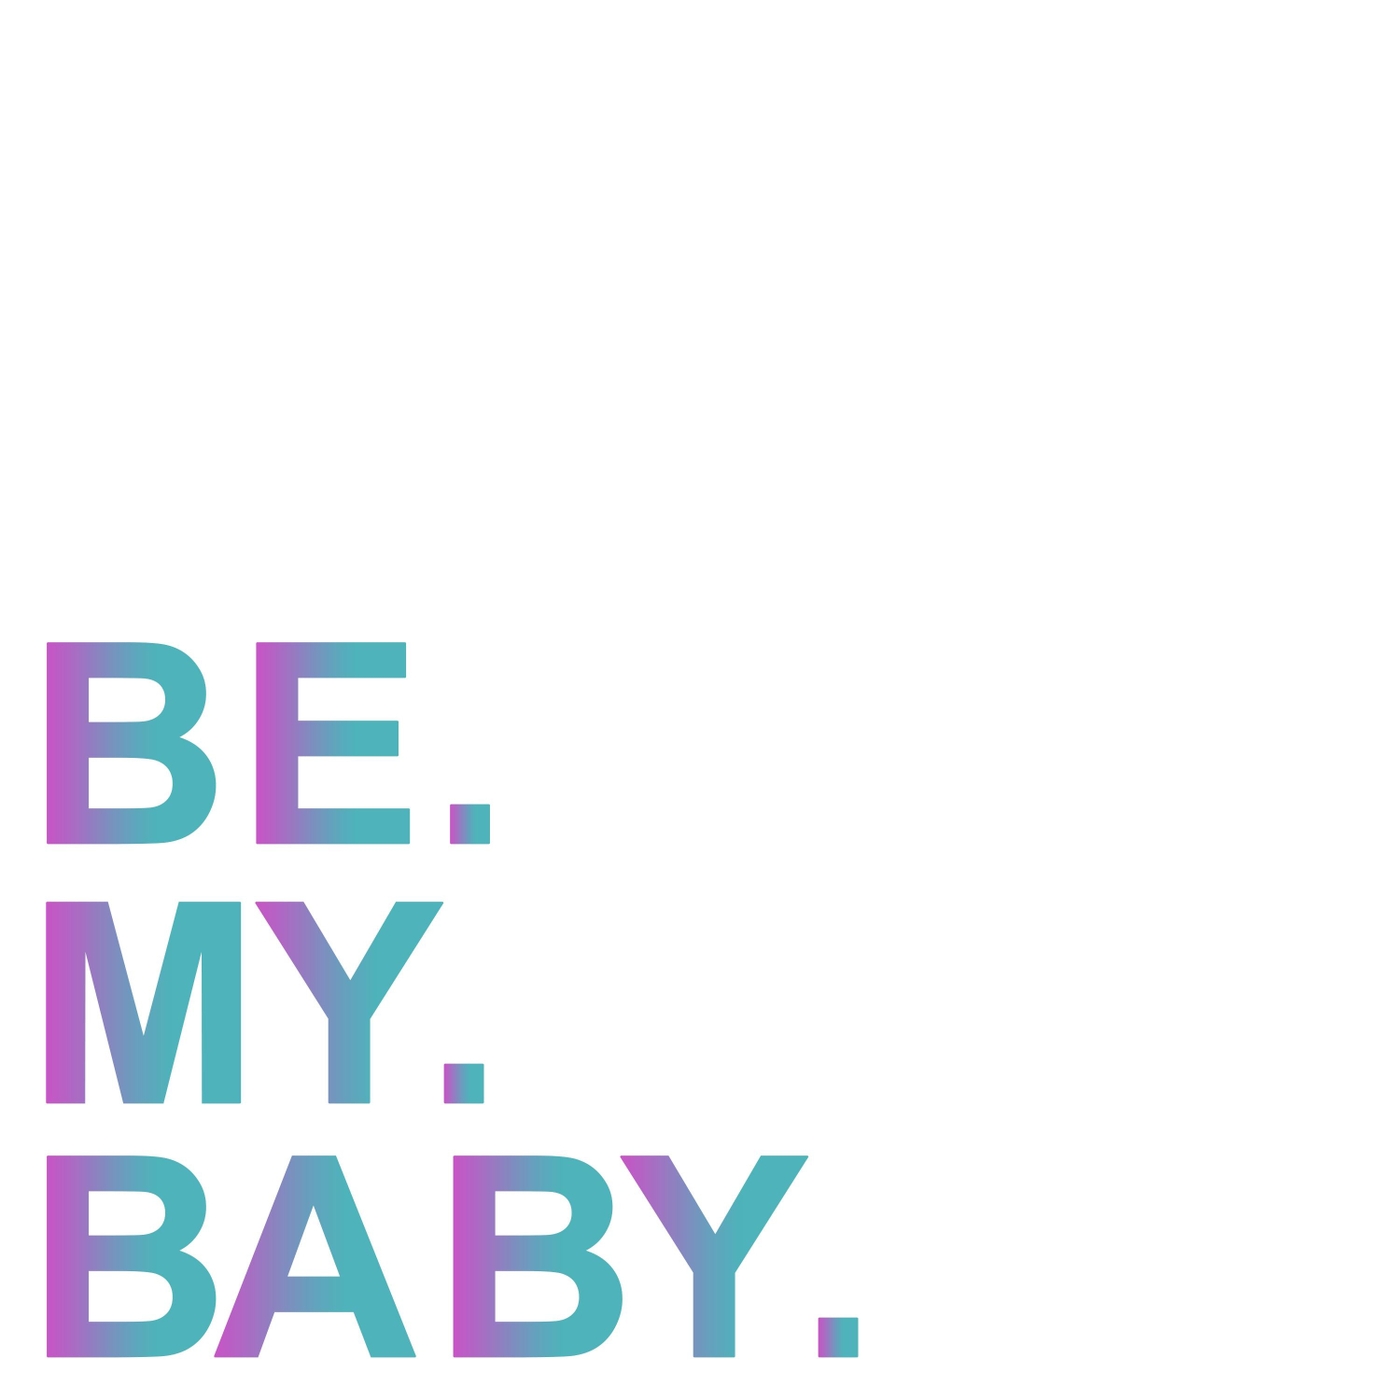 Be. My. Baby.